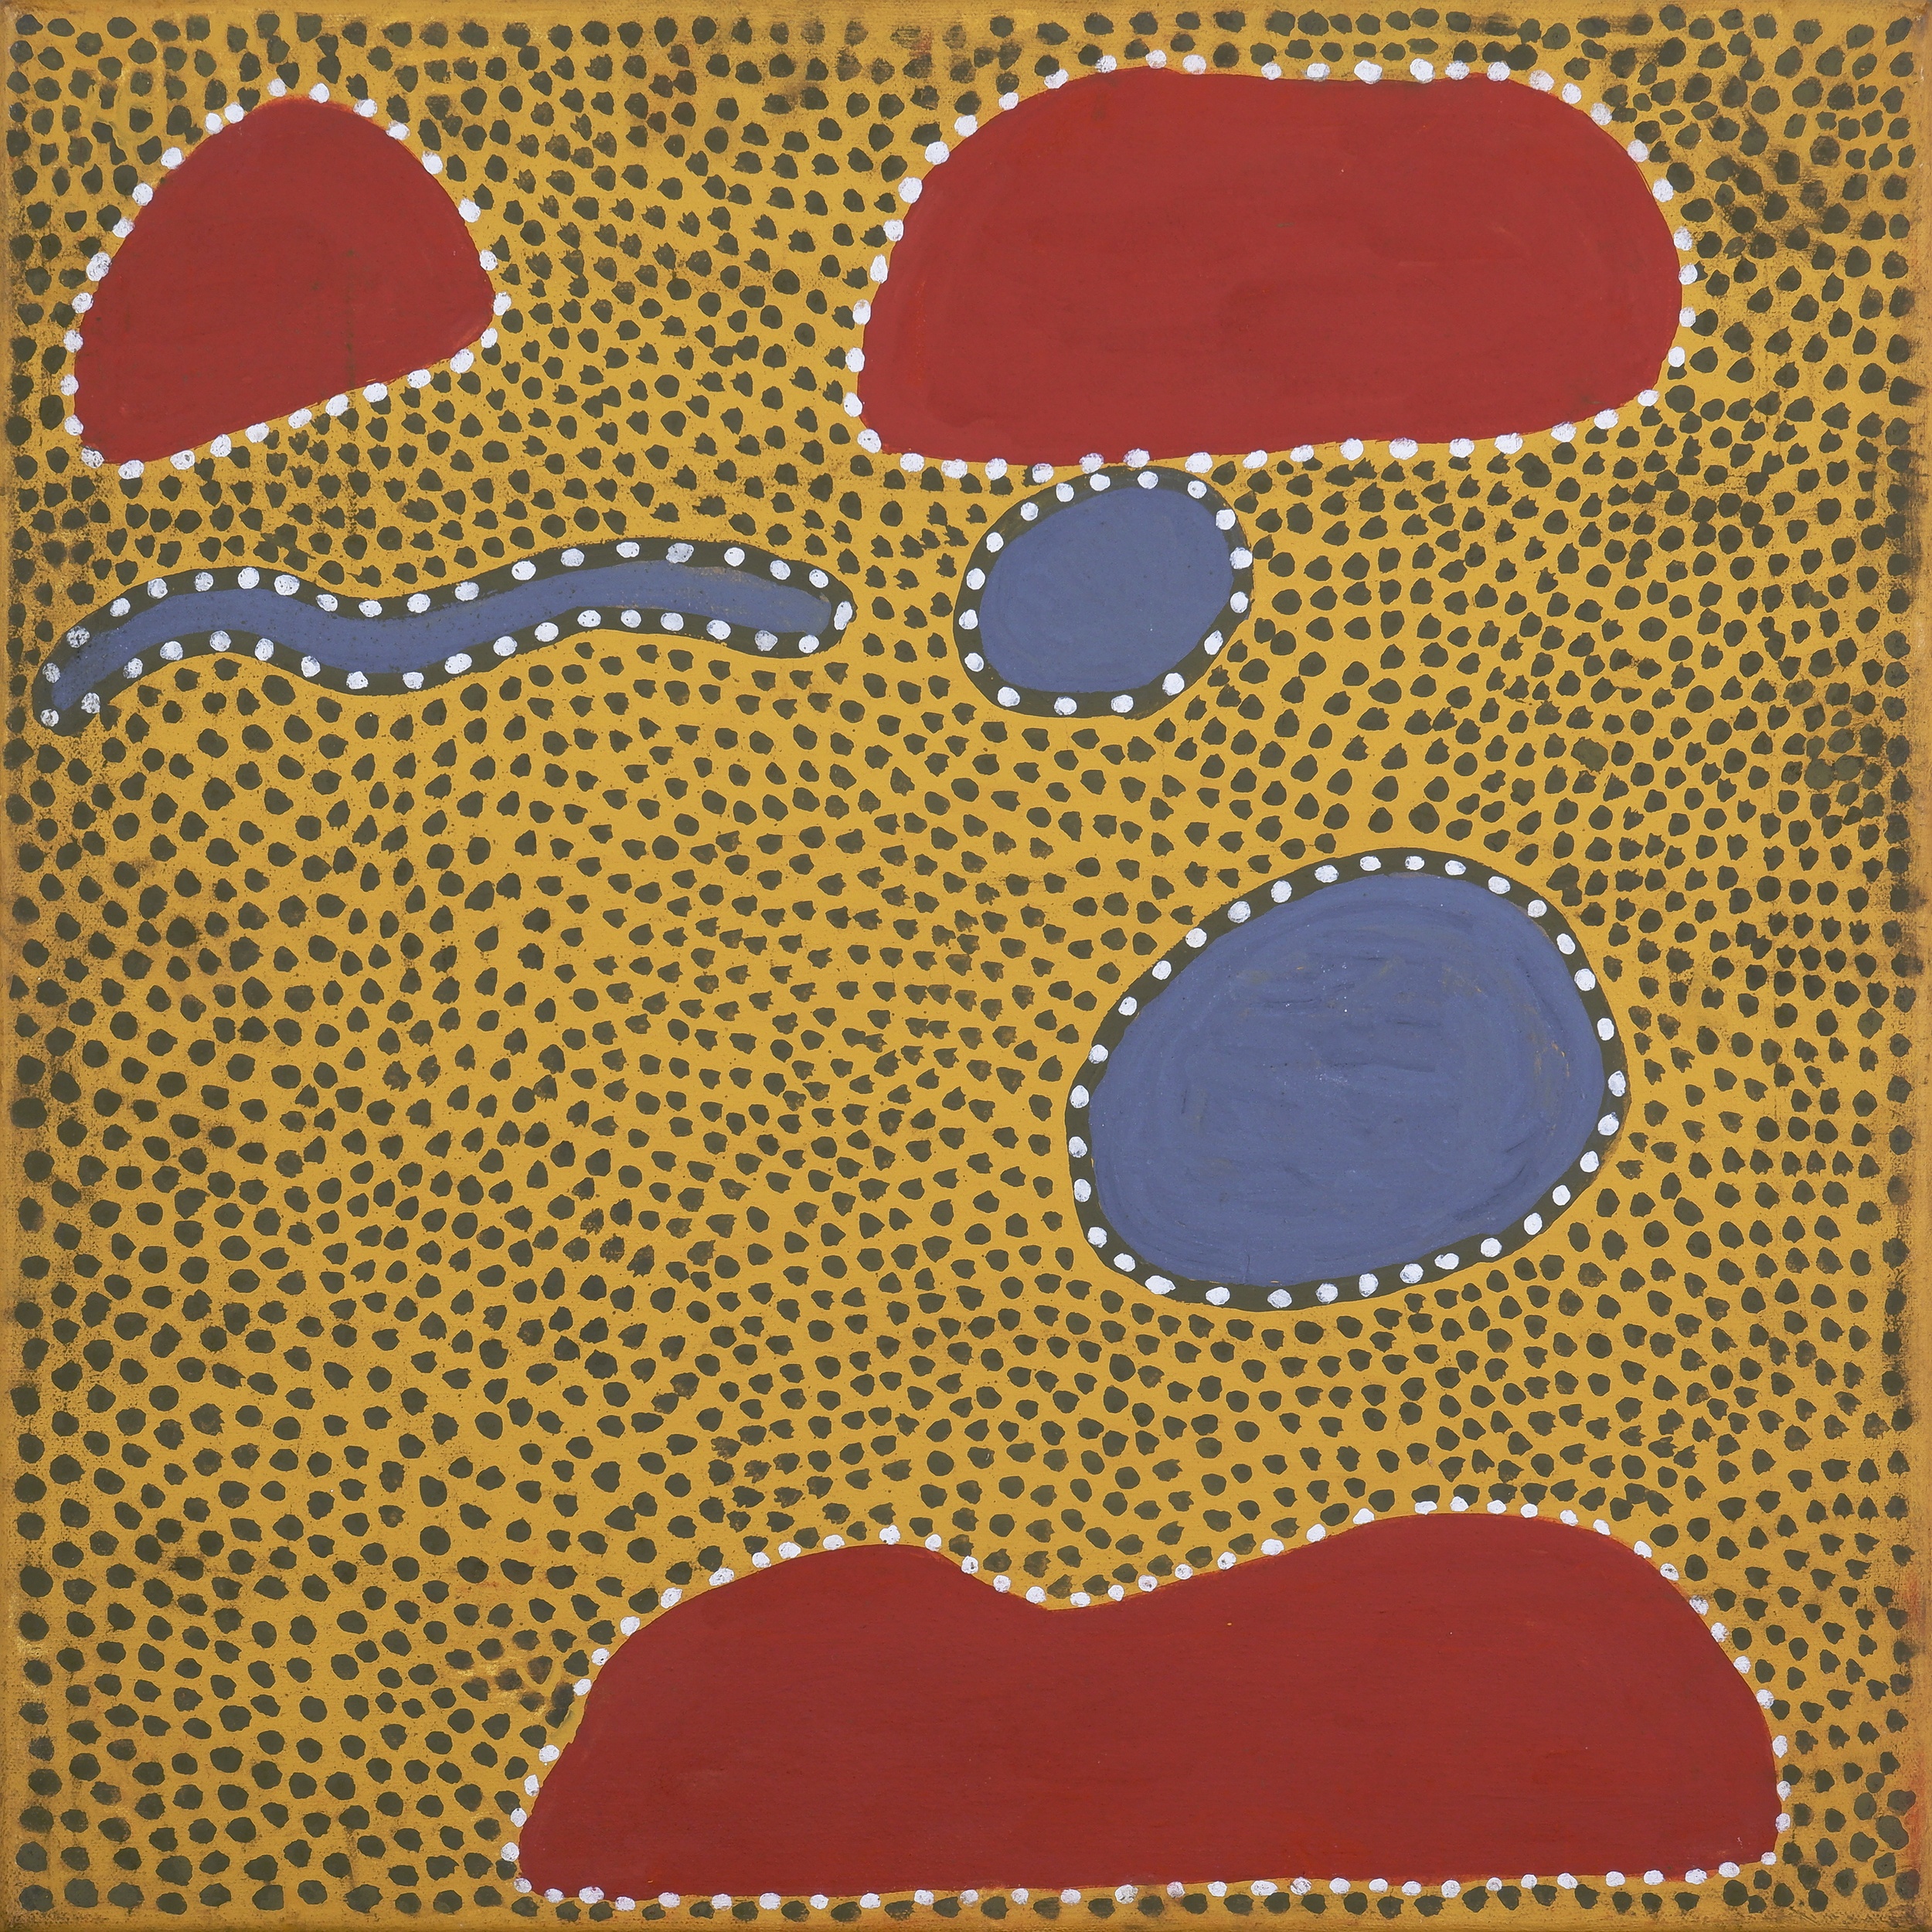 'Daisy Bitting (born 1940, Jaminjung language group), Legune, Natural Ochres and Pigments on Canvas, 45 x 45 cm'